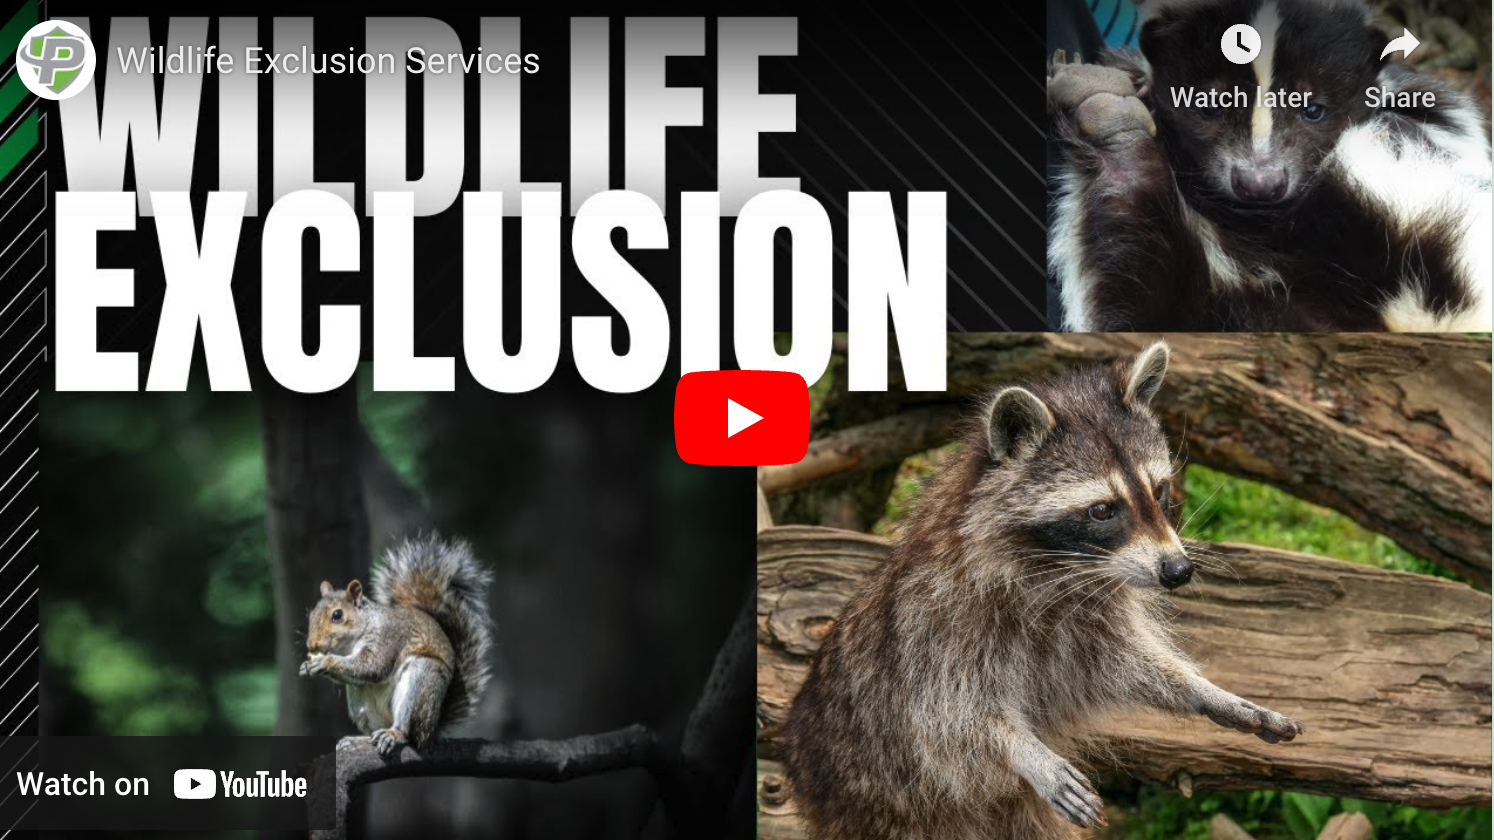 Humane wildlife exclusion for raccoons skunks squirrels